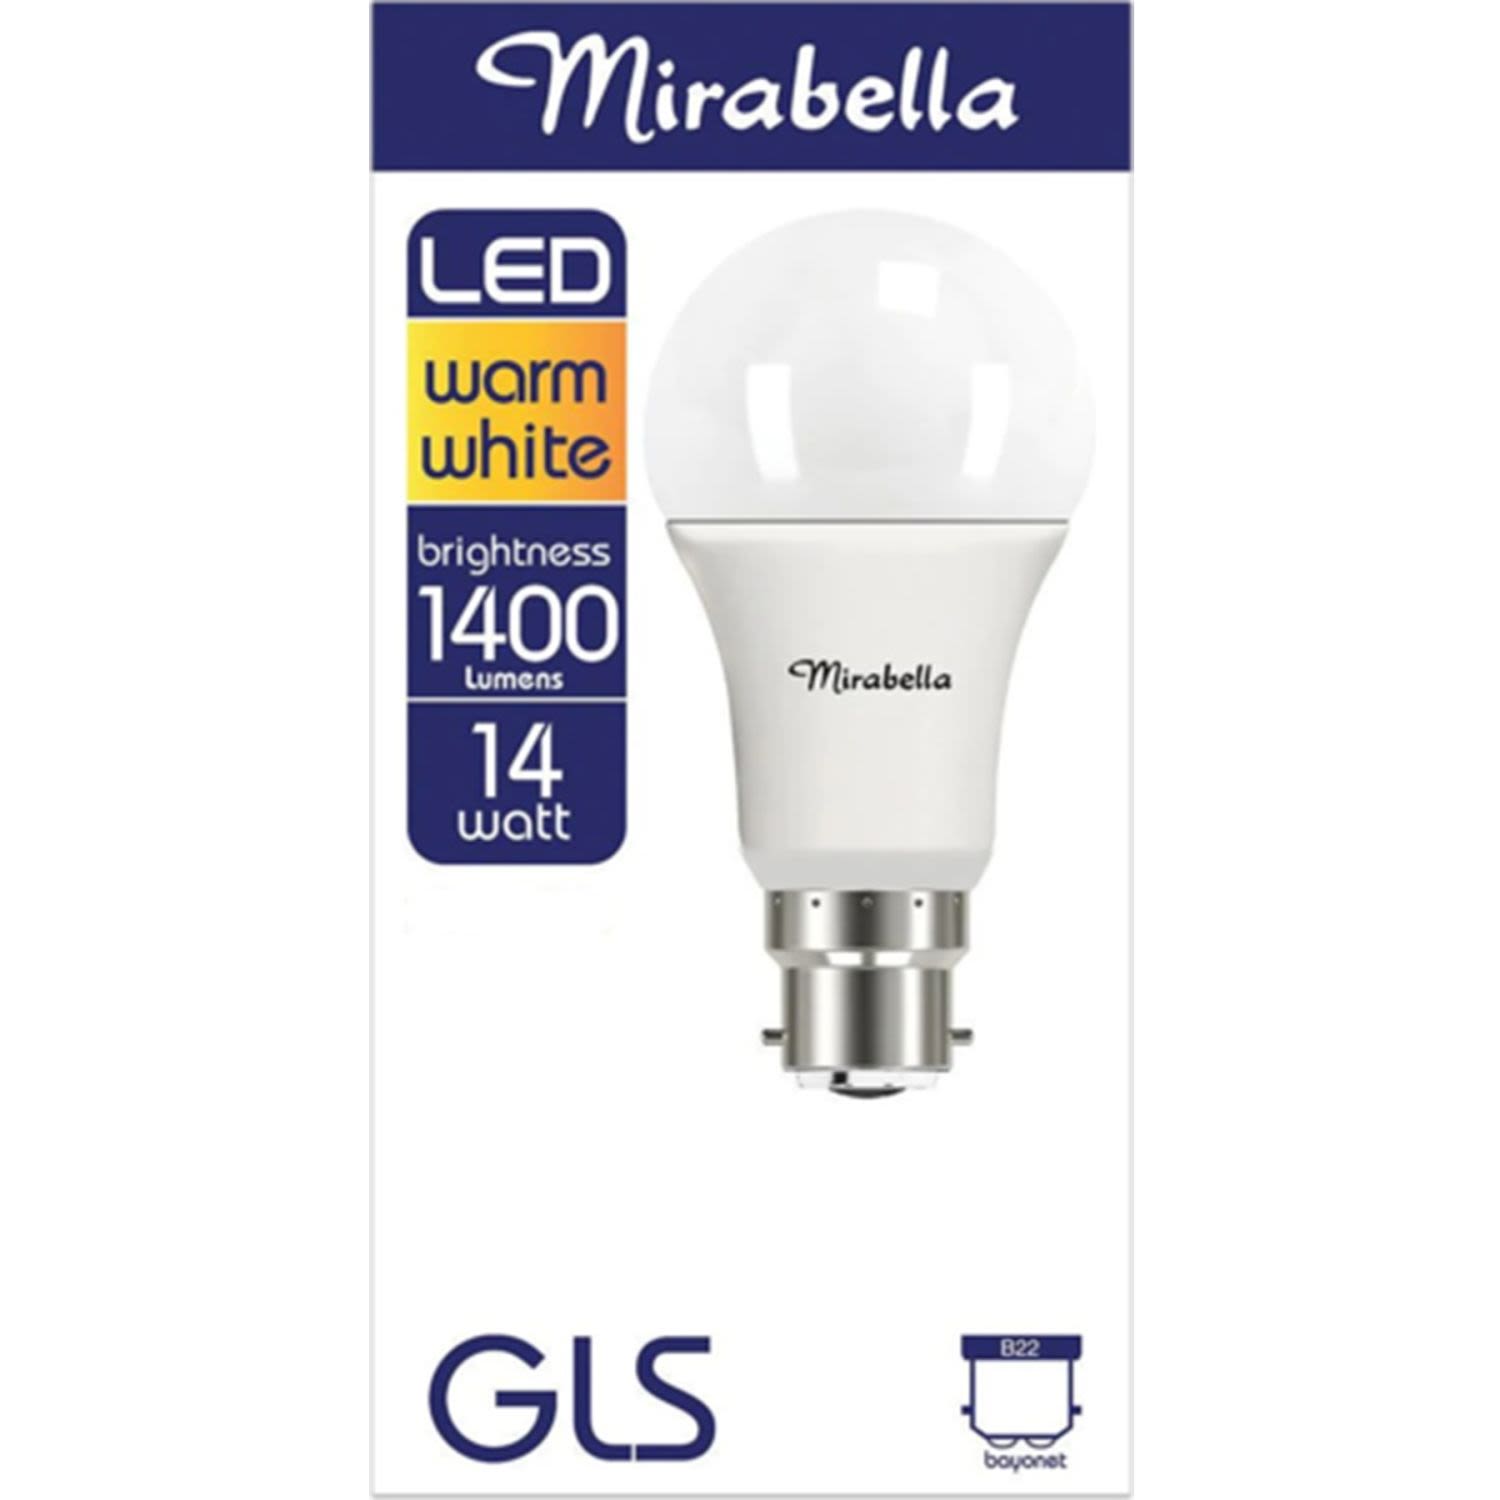 Mirabella GLS LED Warm White Brightness 1400 Lumens 14 Watt Bayonet, 1 Each